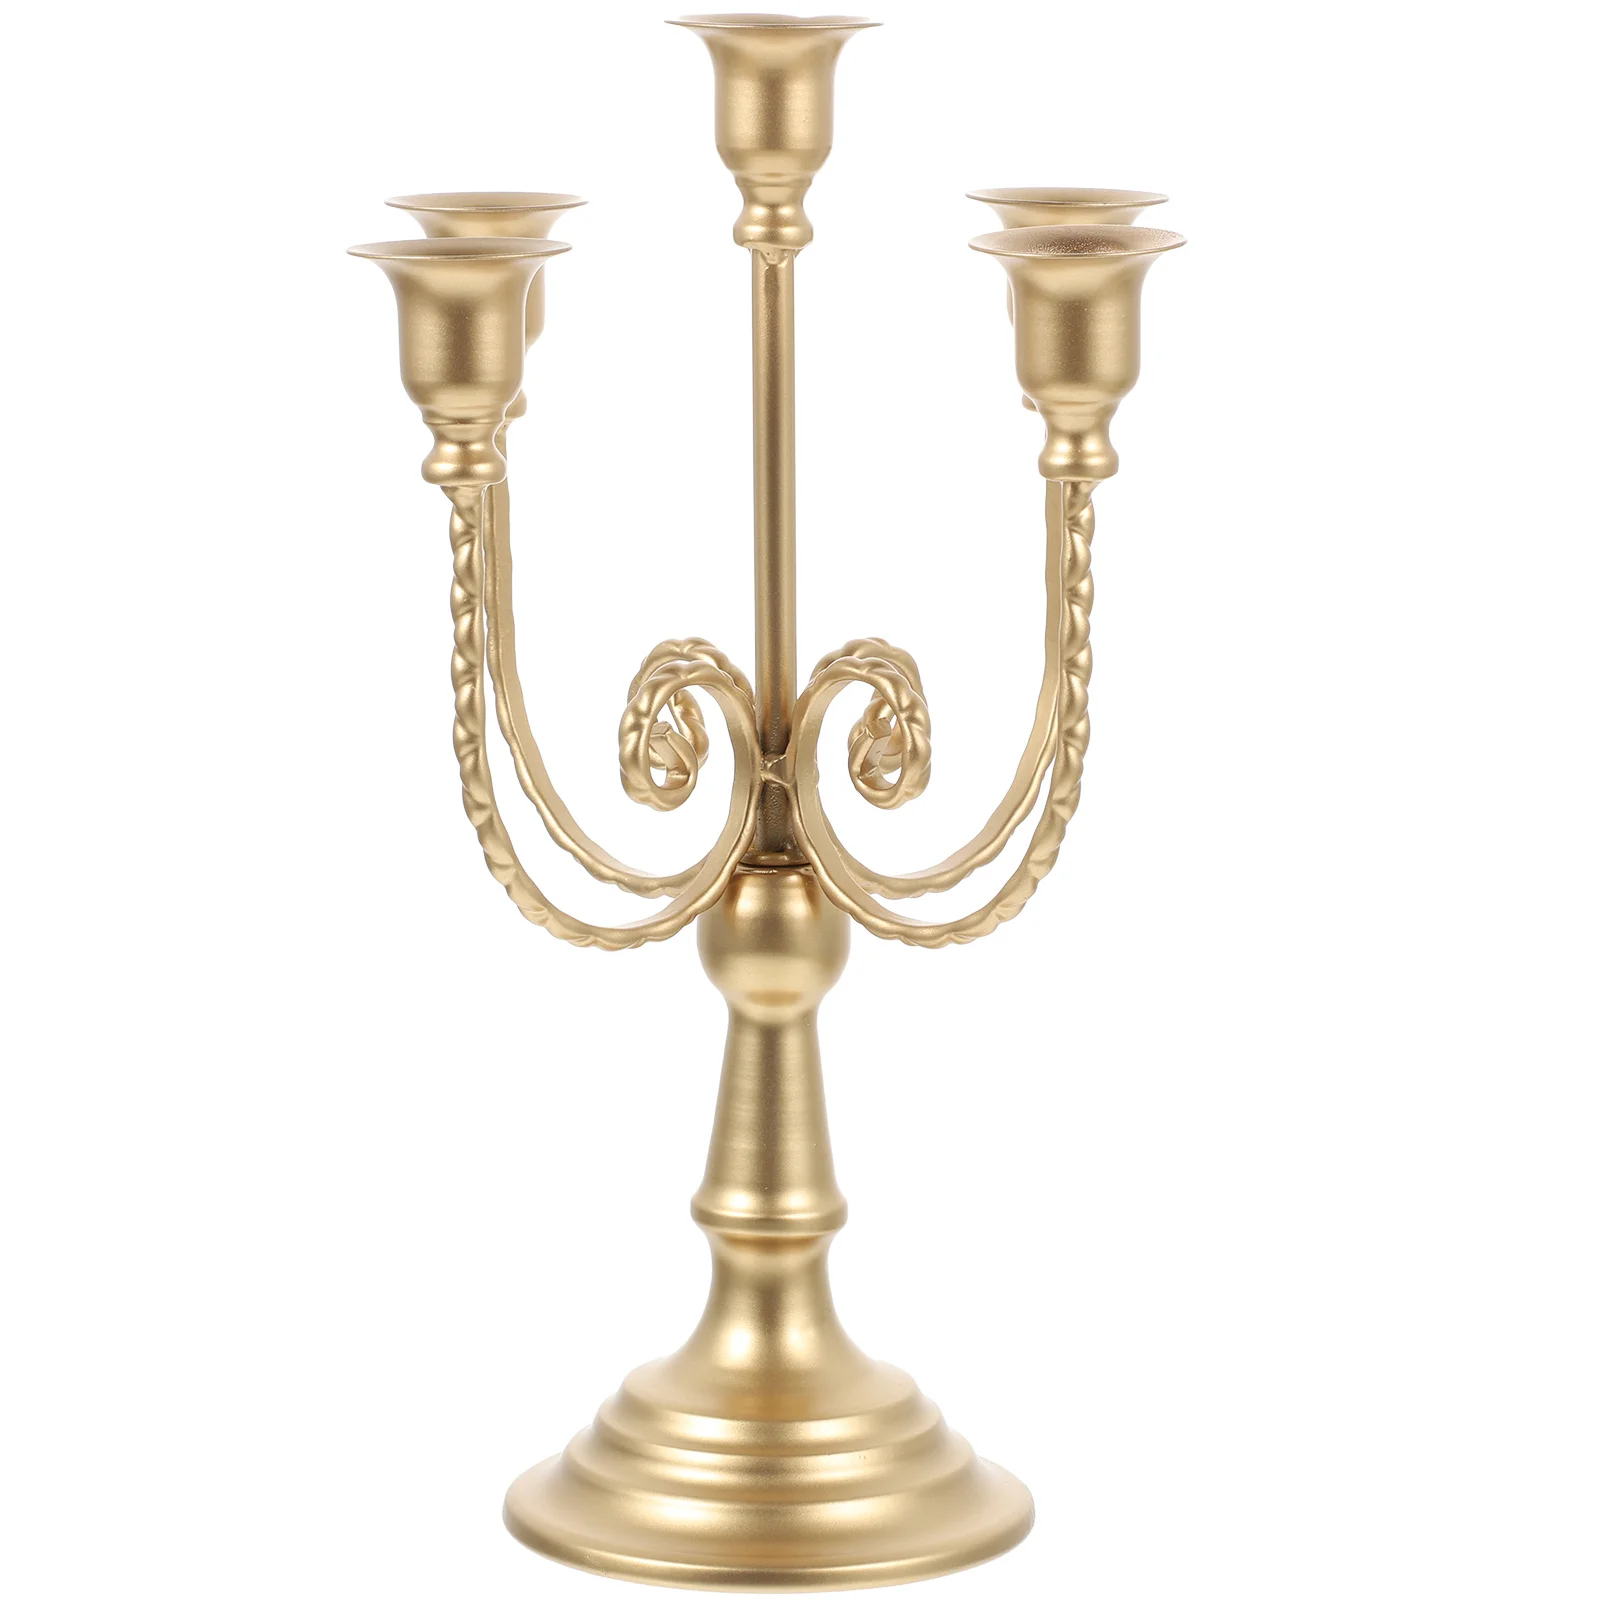 

Holder Holders Candelabra Stand Candlestick Taper Wedding Pillar Tall Decorative Iron Metal Vintage Tealight Rack Centerpiece